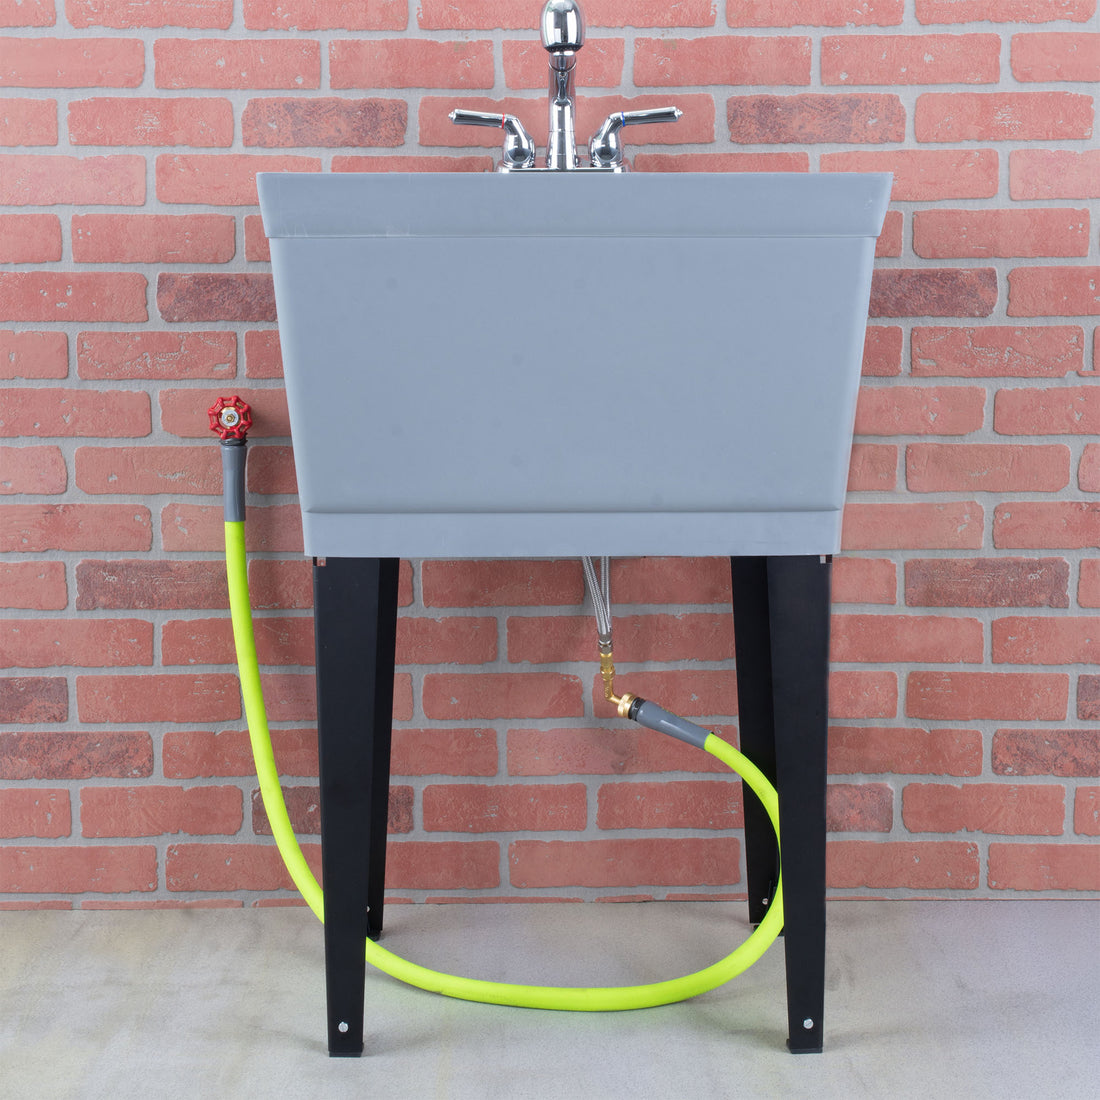 ¾ in. Garden Hose Connector Attachment for Utility Sinks - Utility sinks vanites Tehila